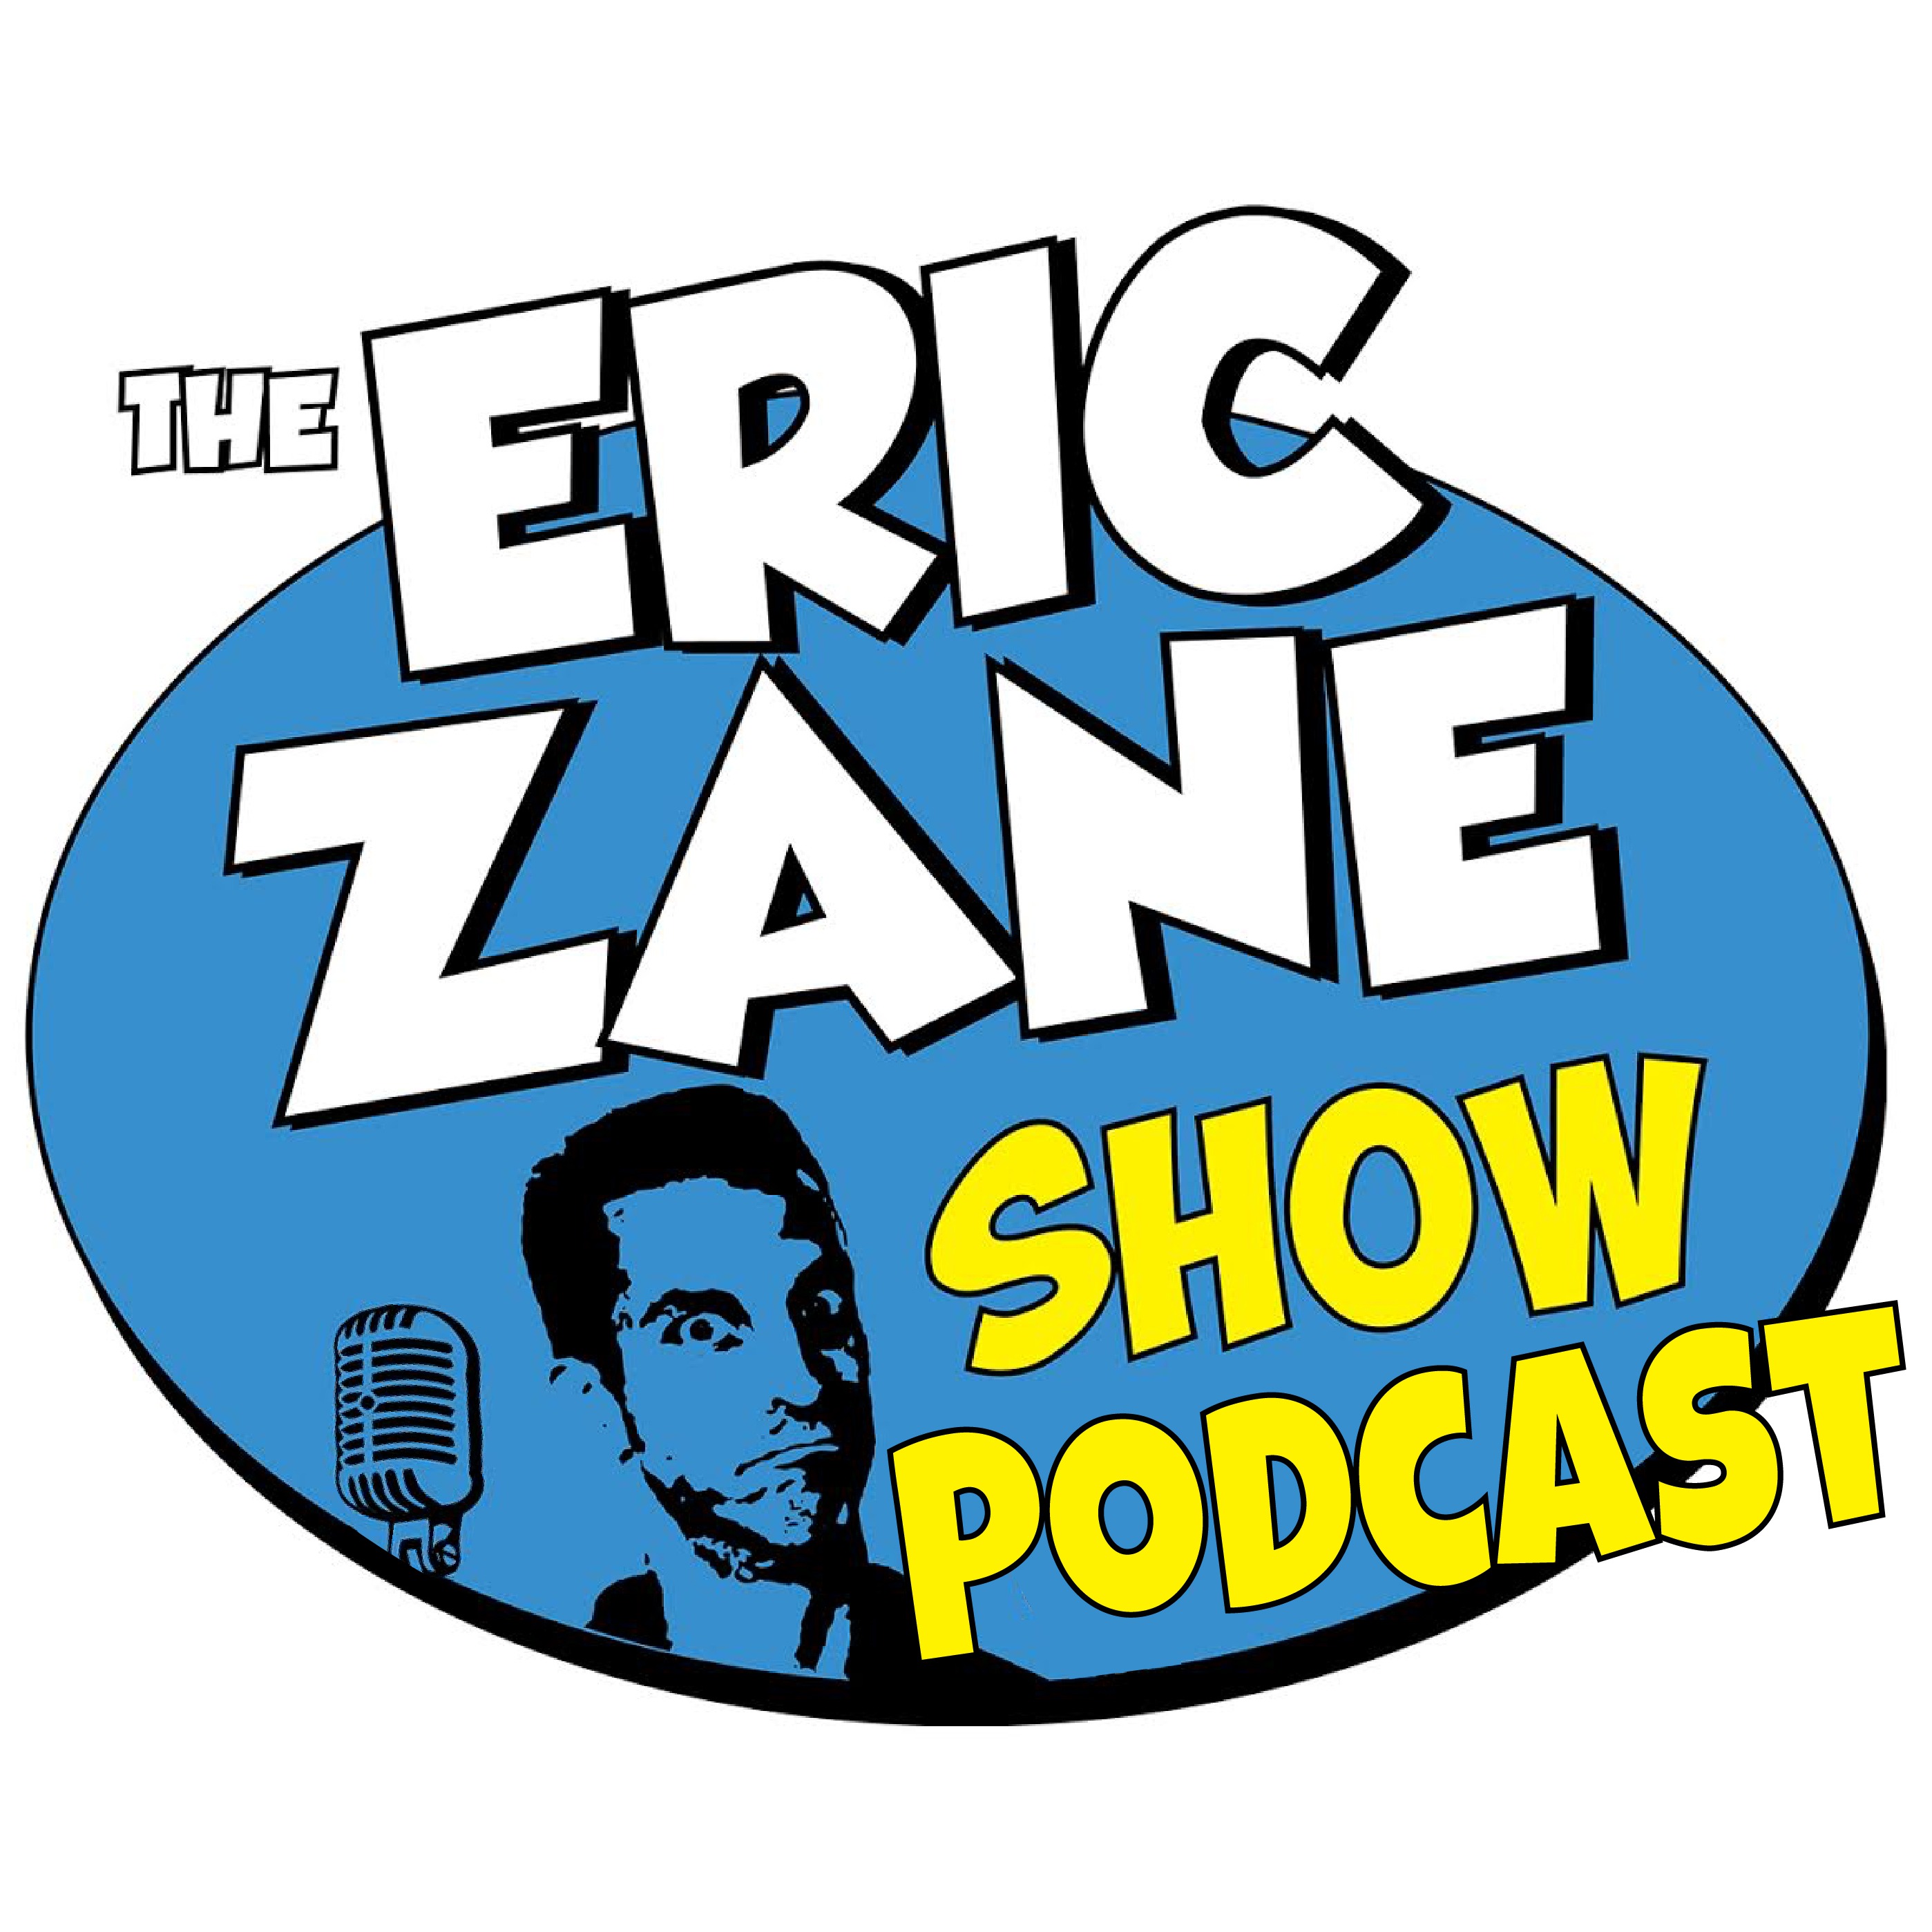 Eric Zane Show Podcast 1028 - Nashville school shooting